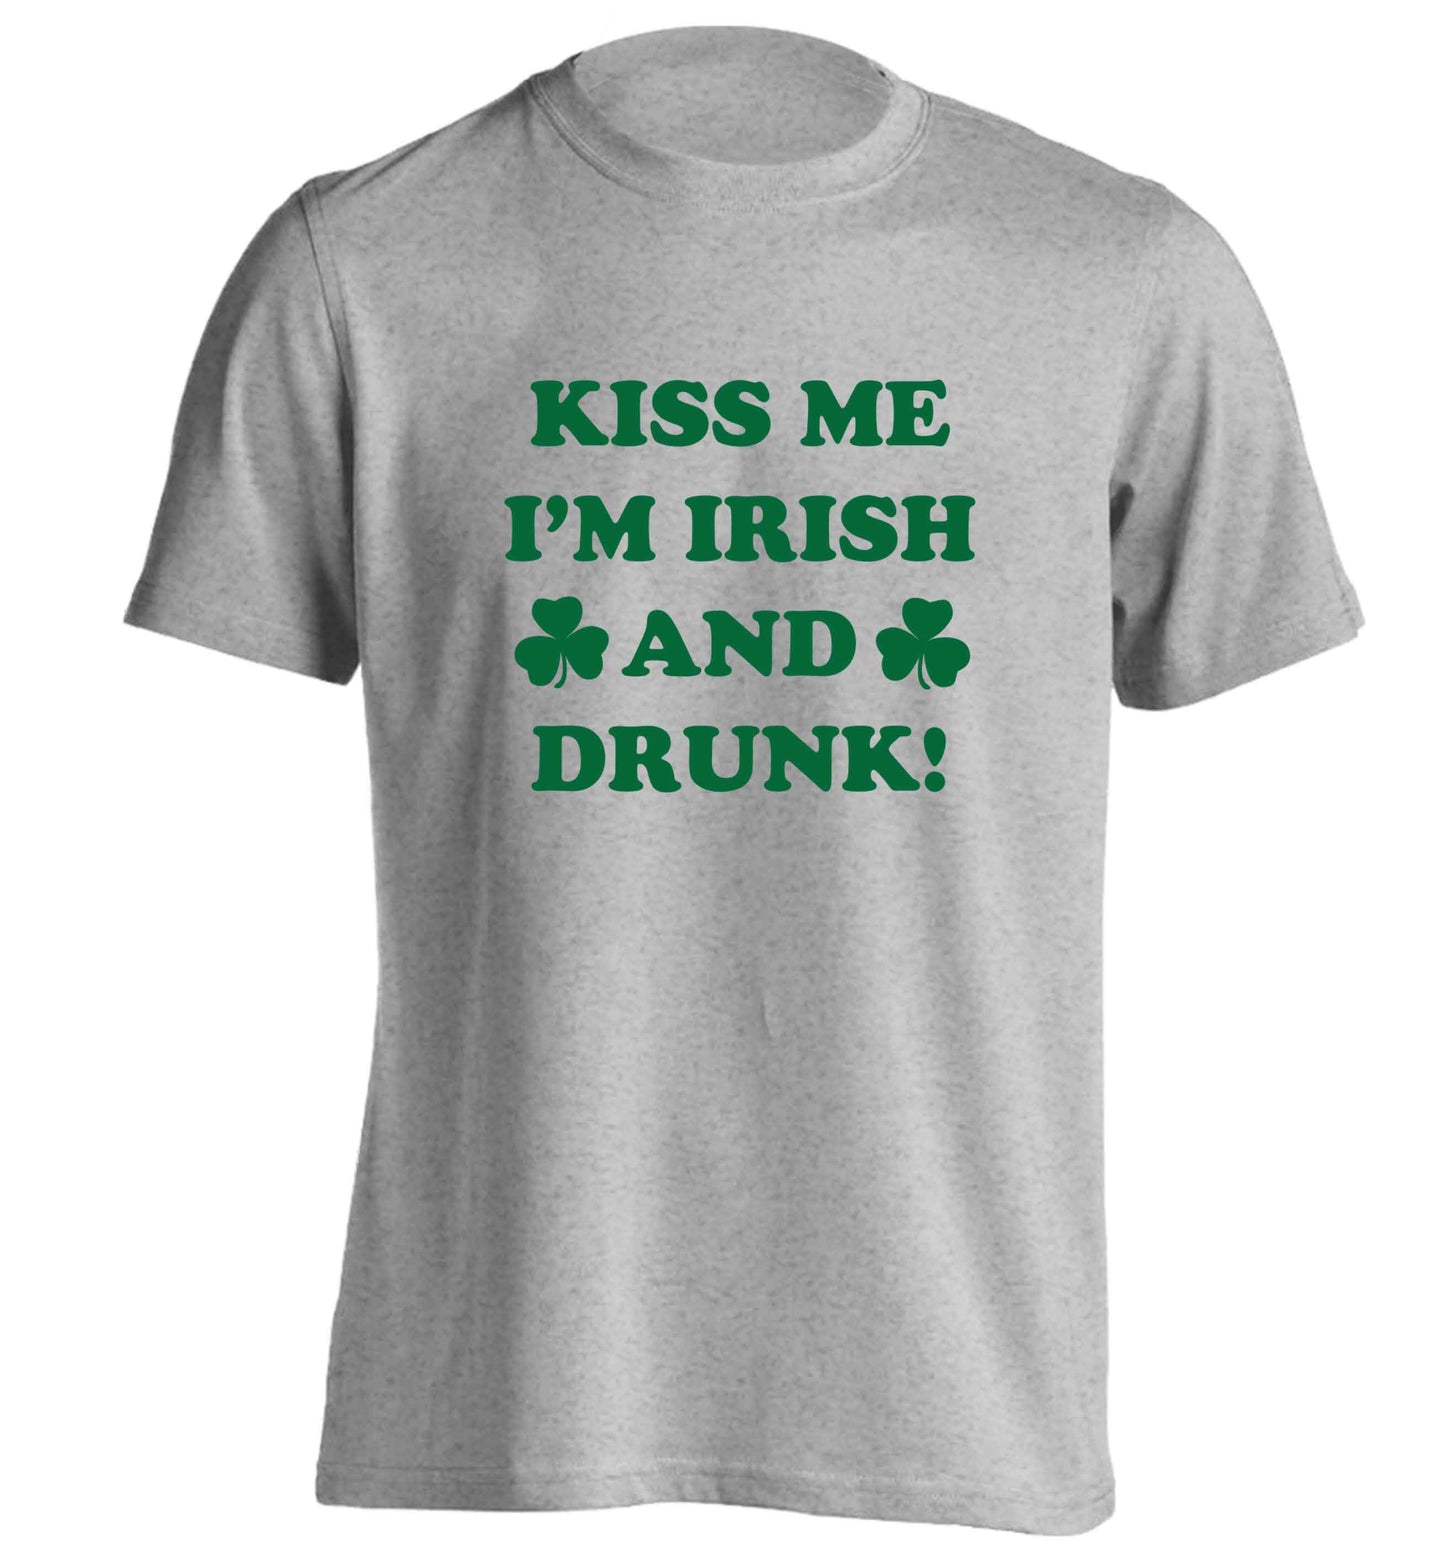 Kiss me I'm Irish and drunk adults unisex grey Tshirt 2XL